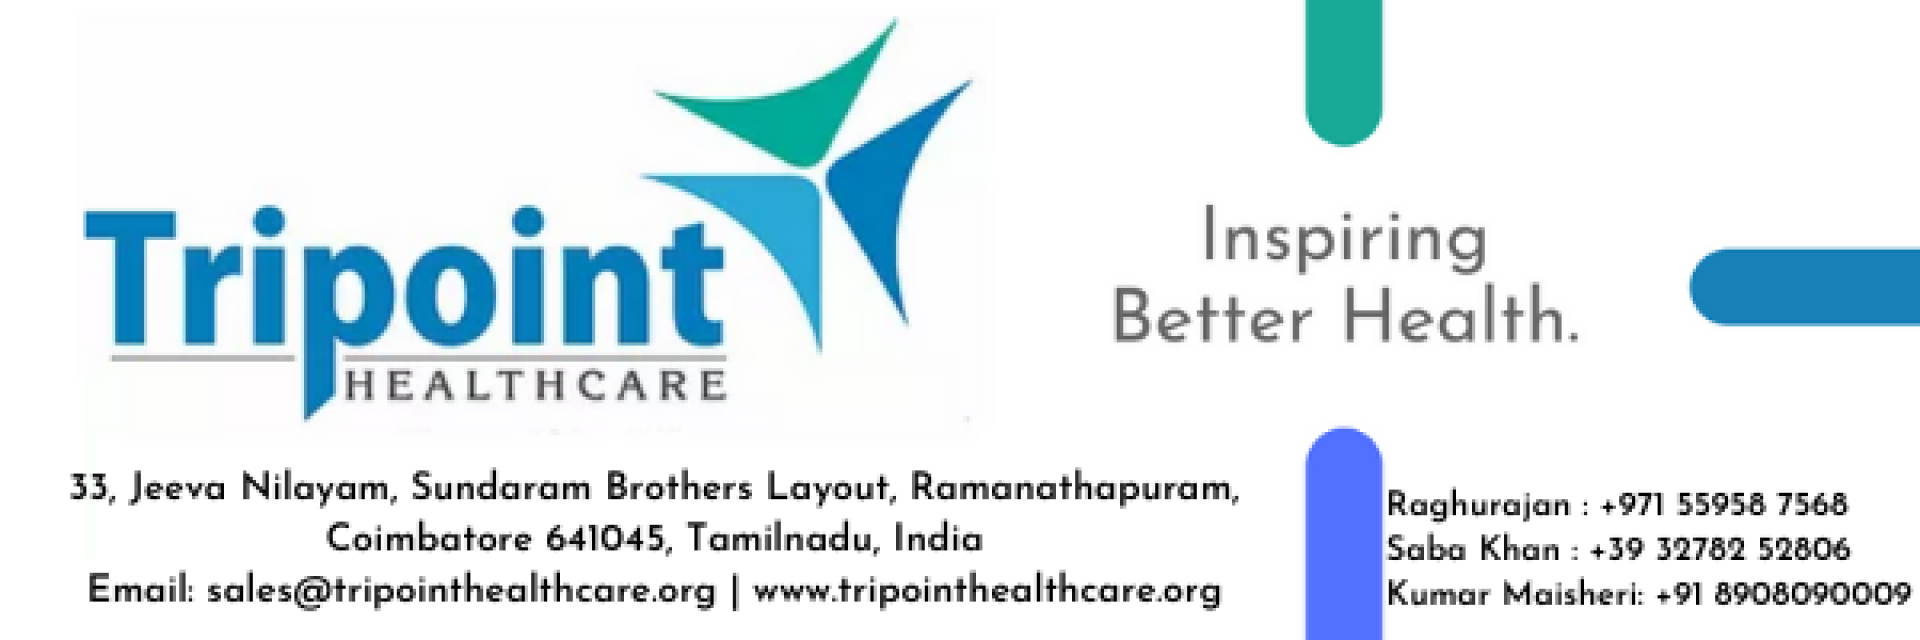 Tripoint Healthcare Ltd